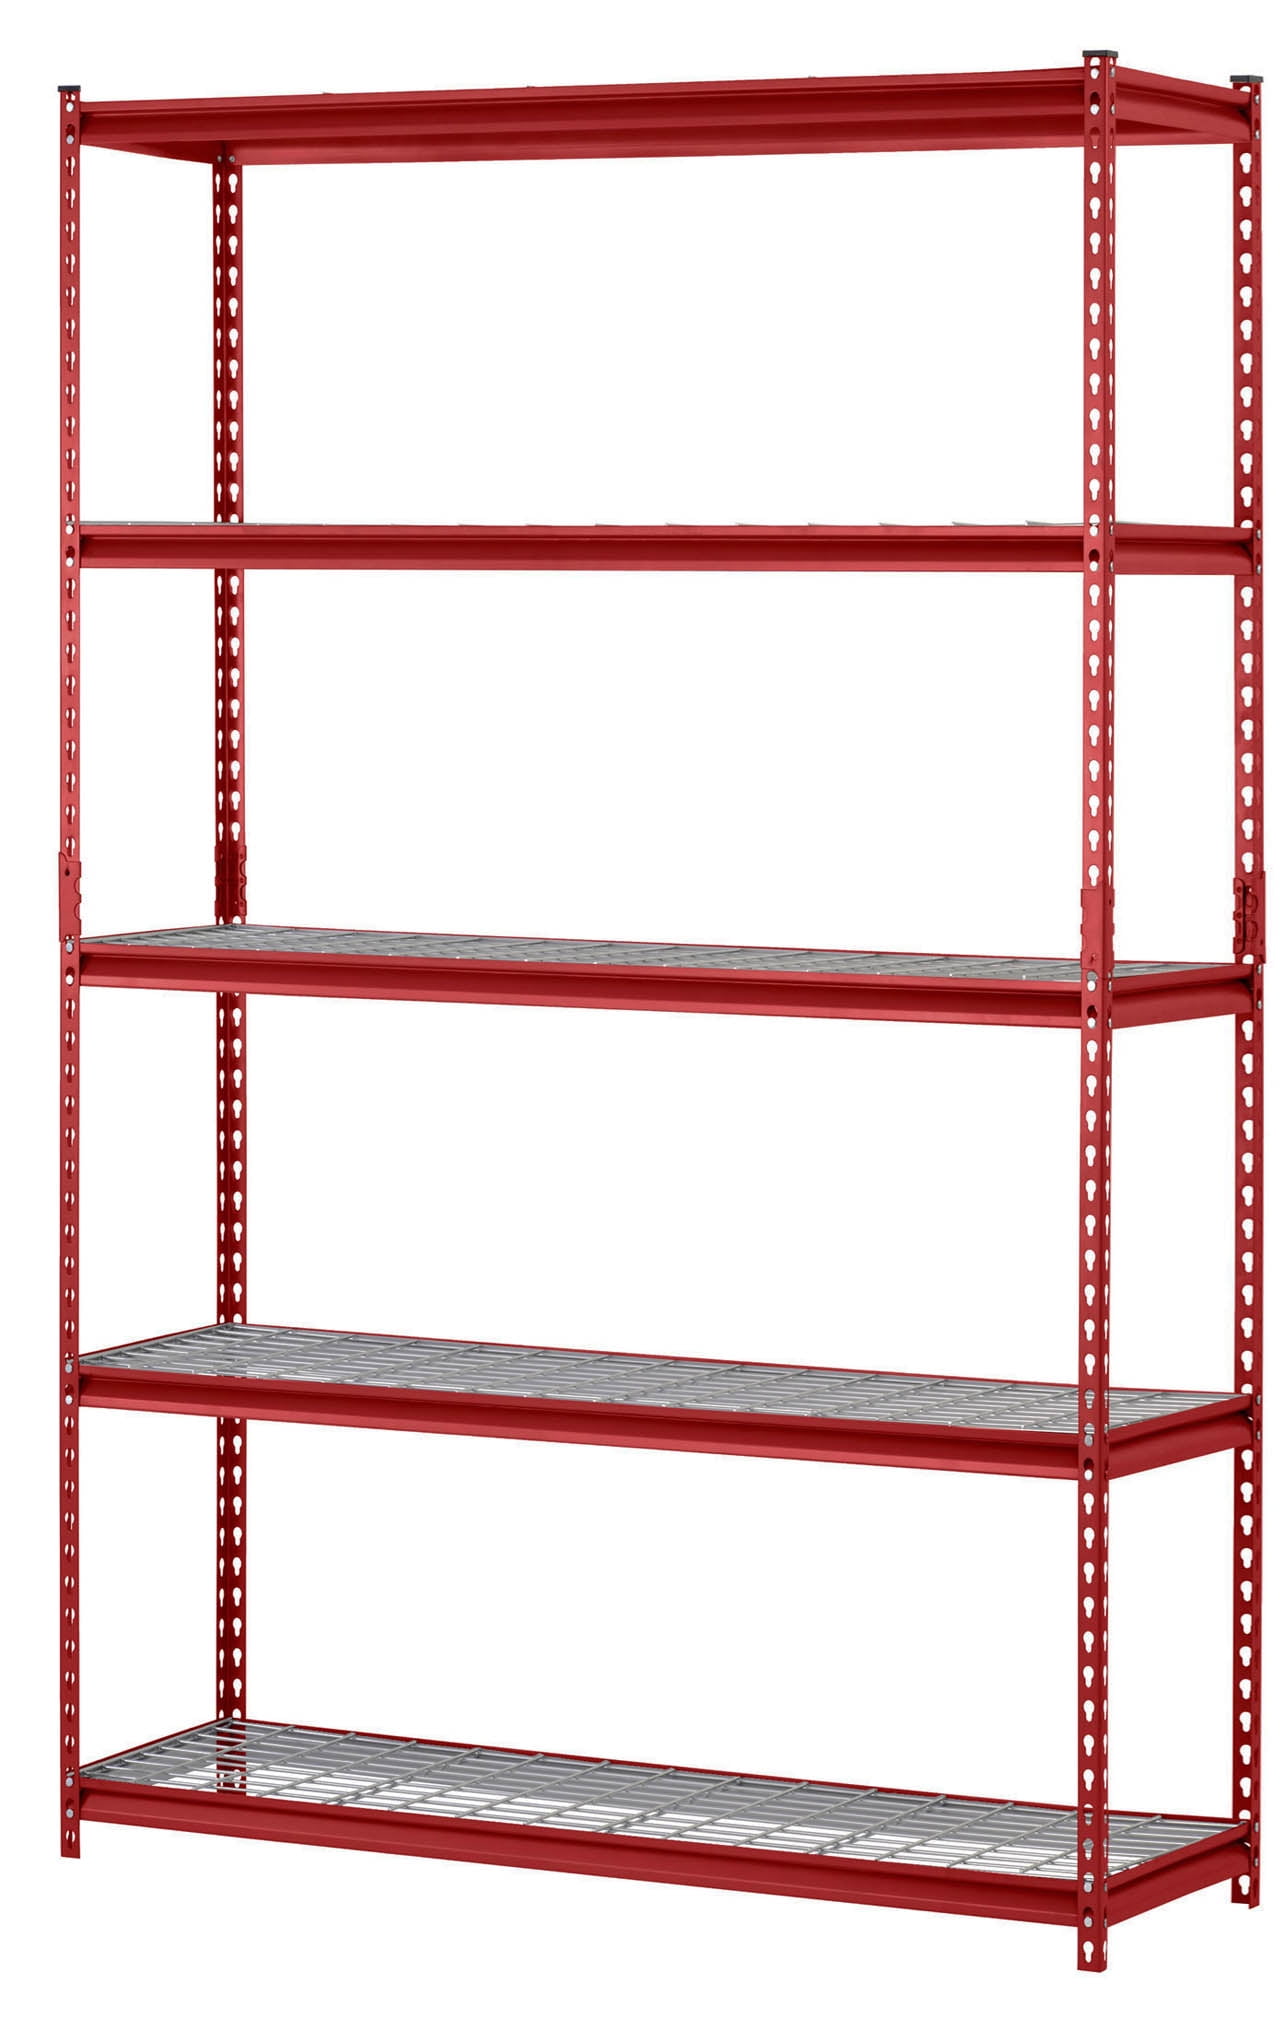 Edsal UR245LBLK Muscle Rack 5-Shelf Steel Shelving Unit for sale online 